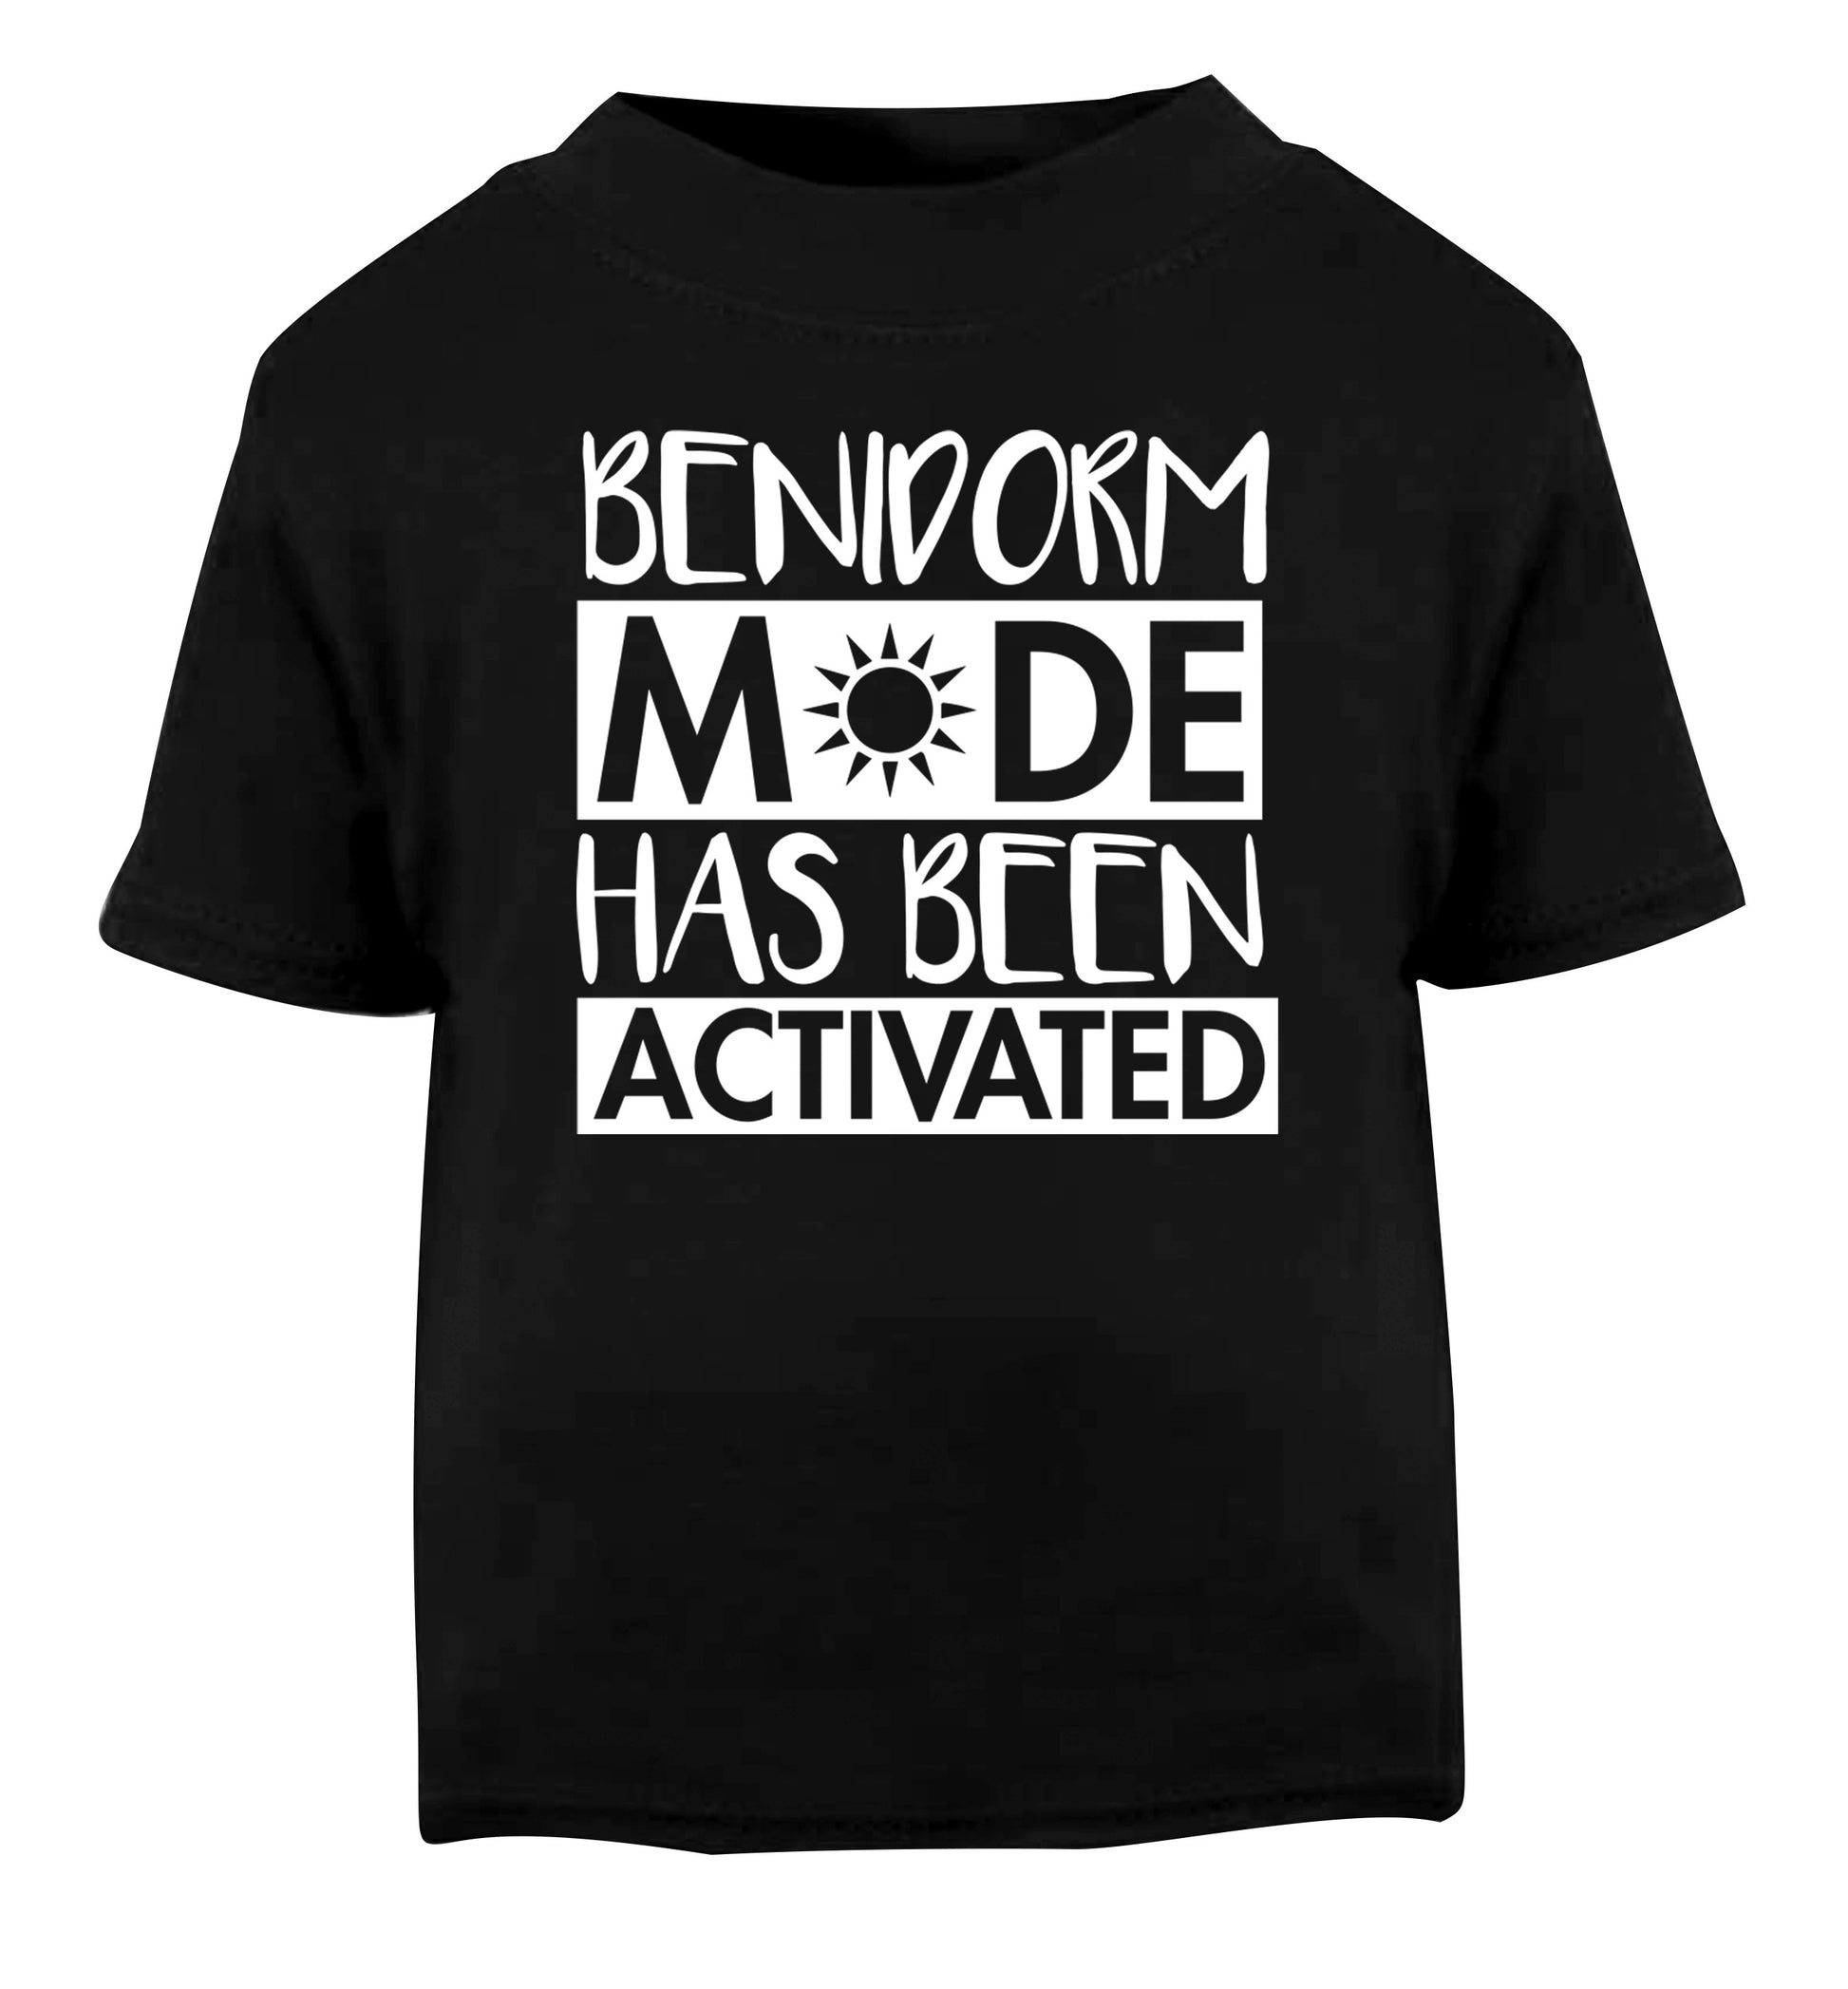 Benidorm mode has been activated Black Baby Toddler Tshirt 2 years